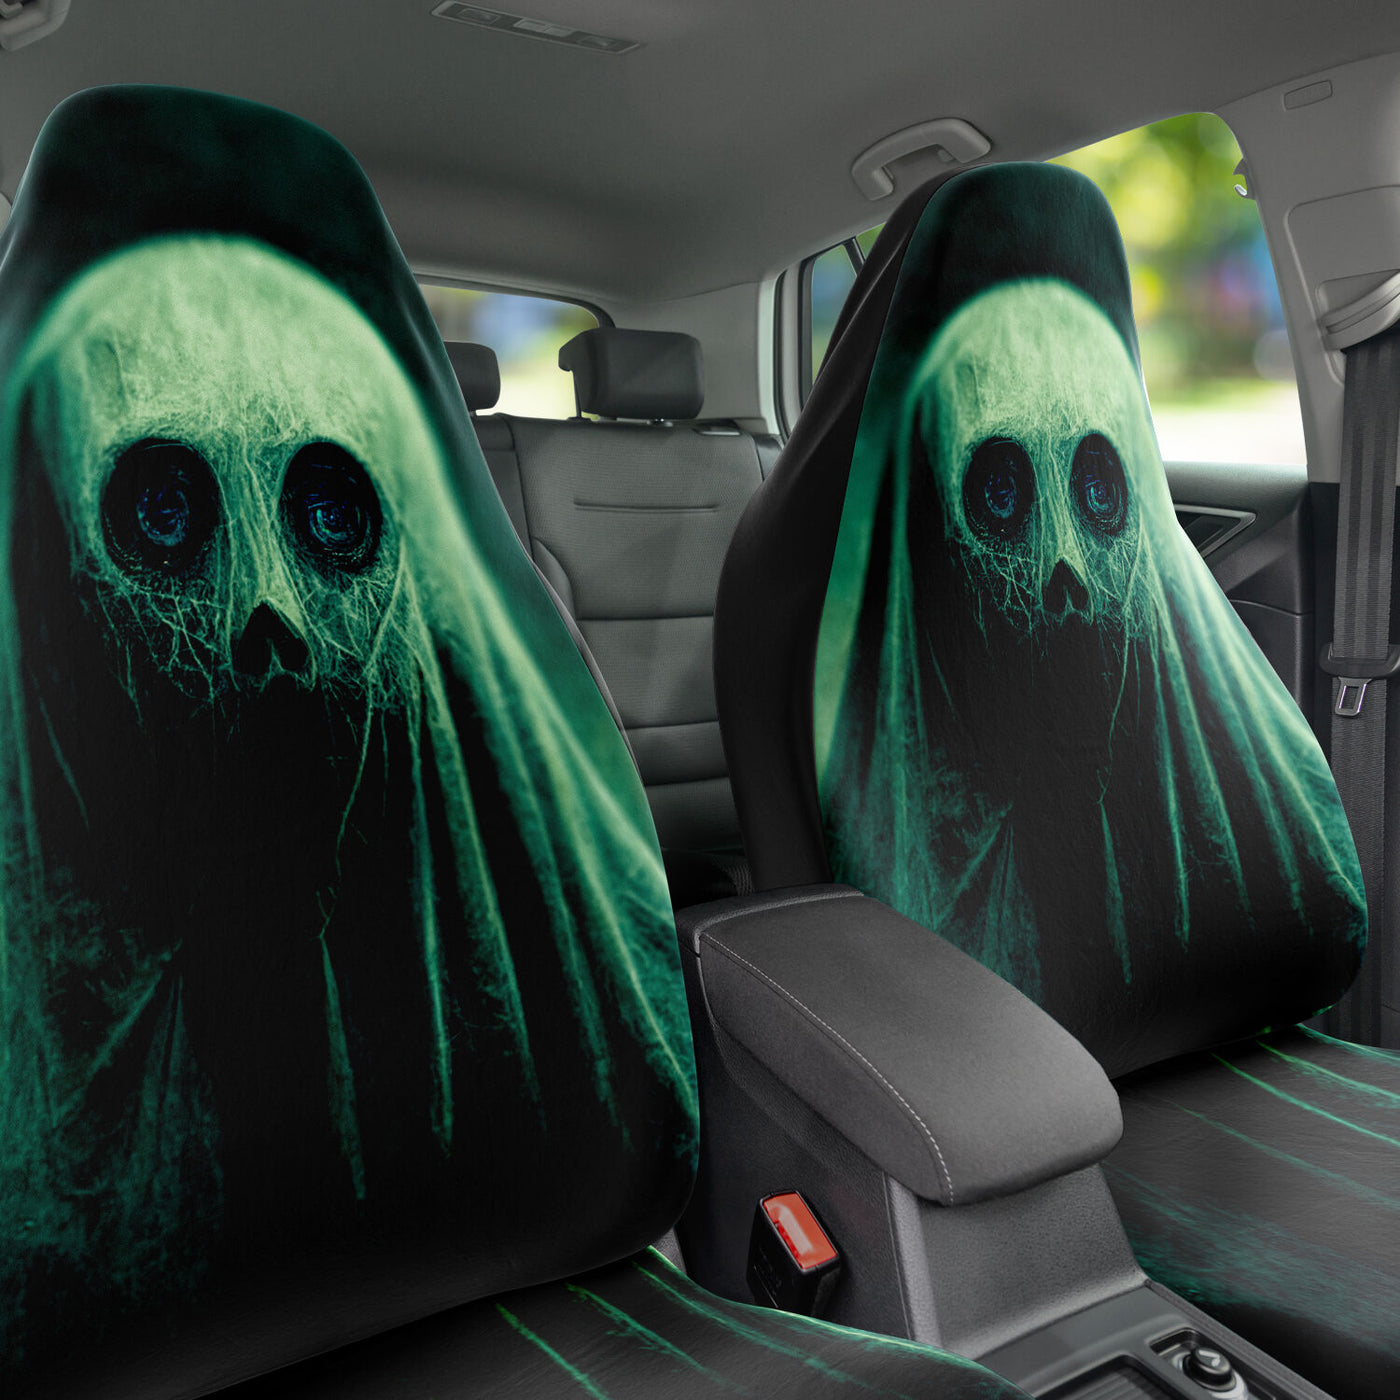 Dark Slate Gray Gothic Green Ghost Horror Art | Car Seat Covers